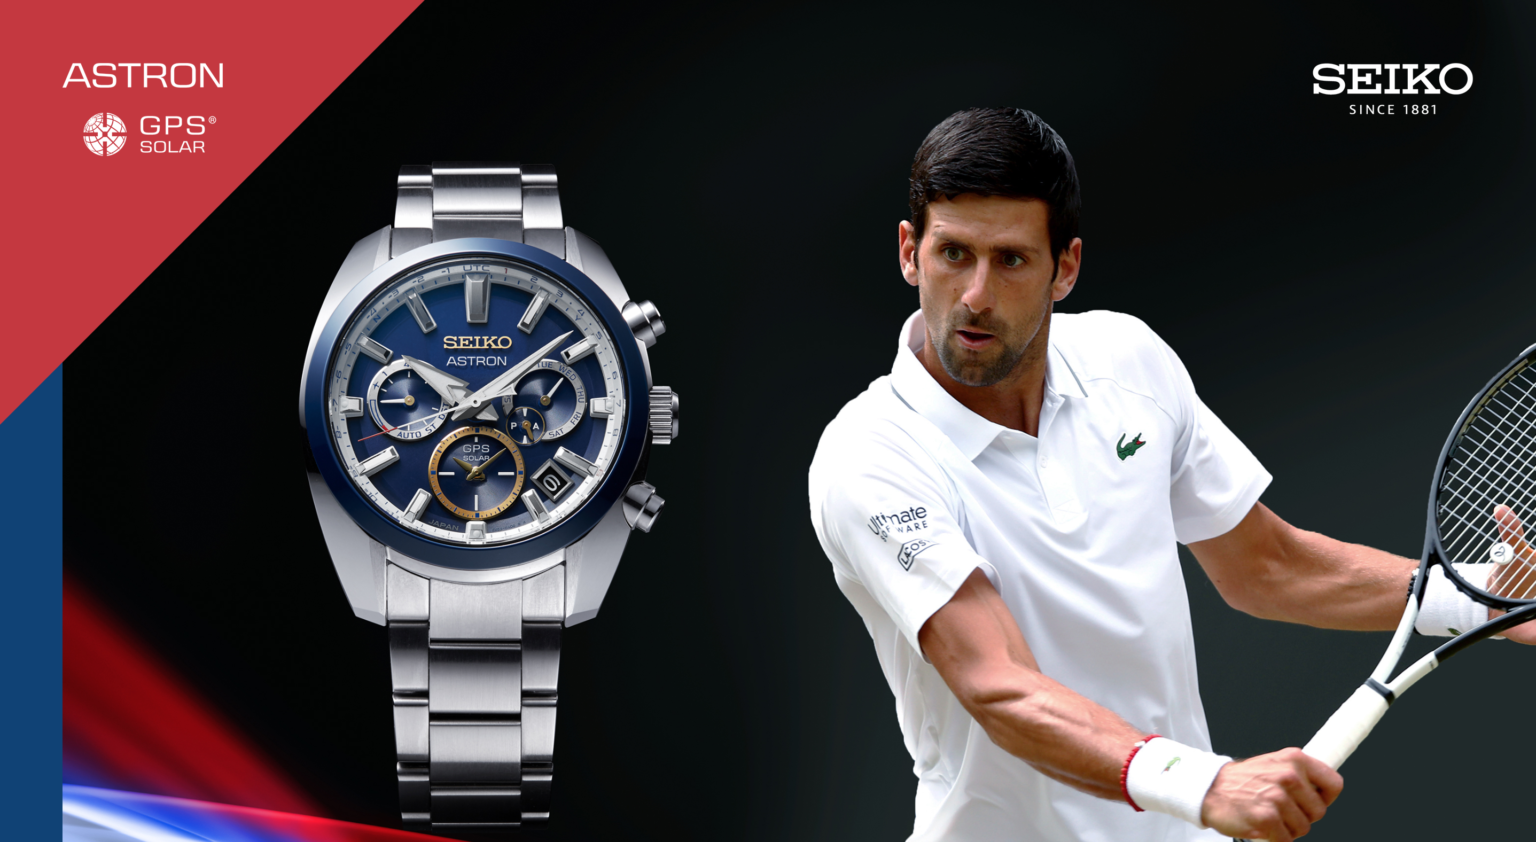 INTRODUCING The Seiko Astron Novak Djokovic 2020 Limited Edition